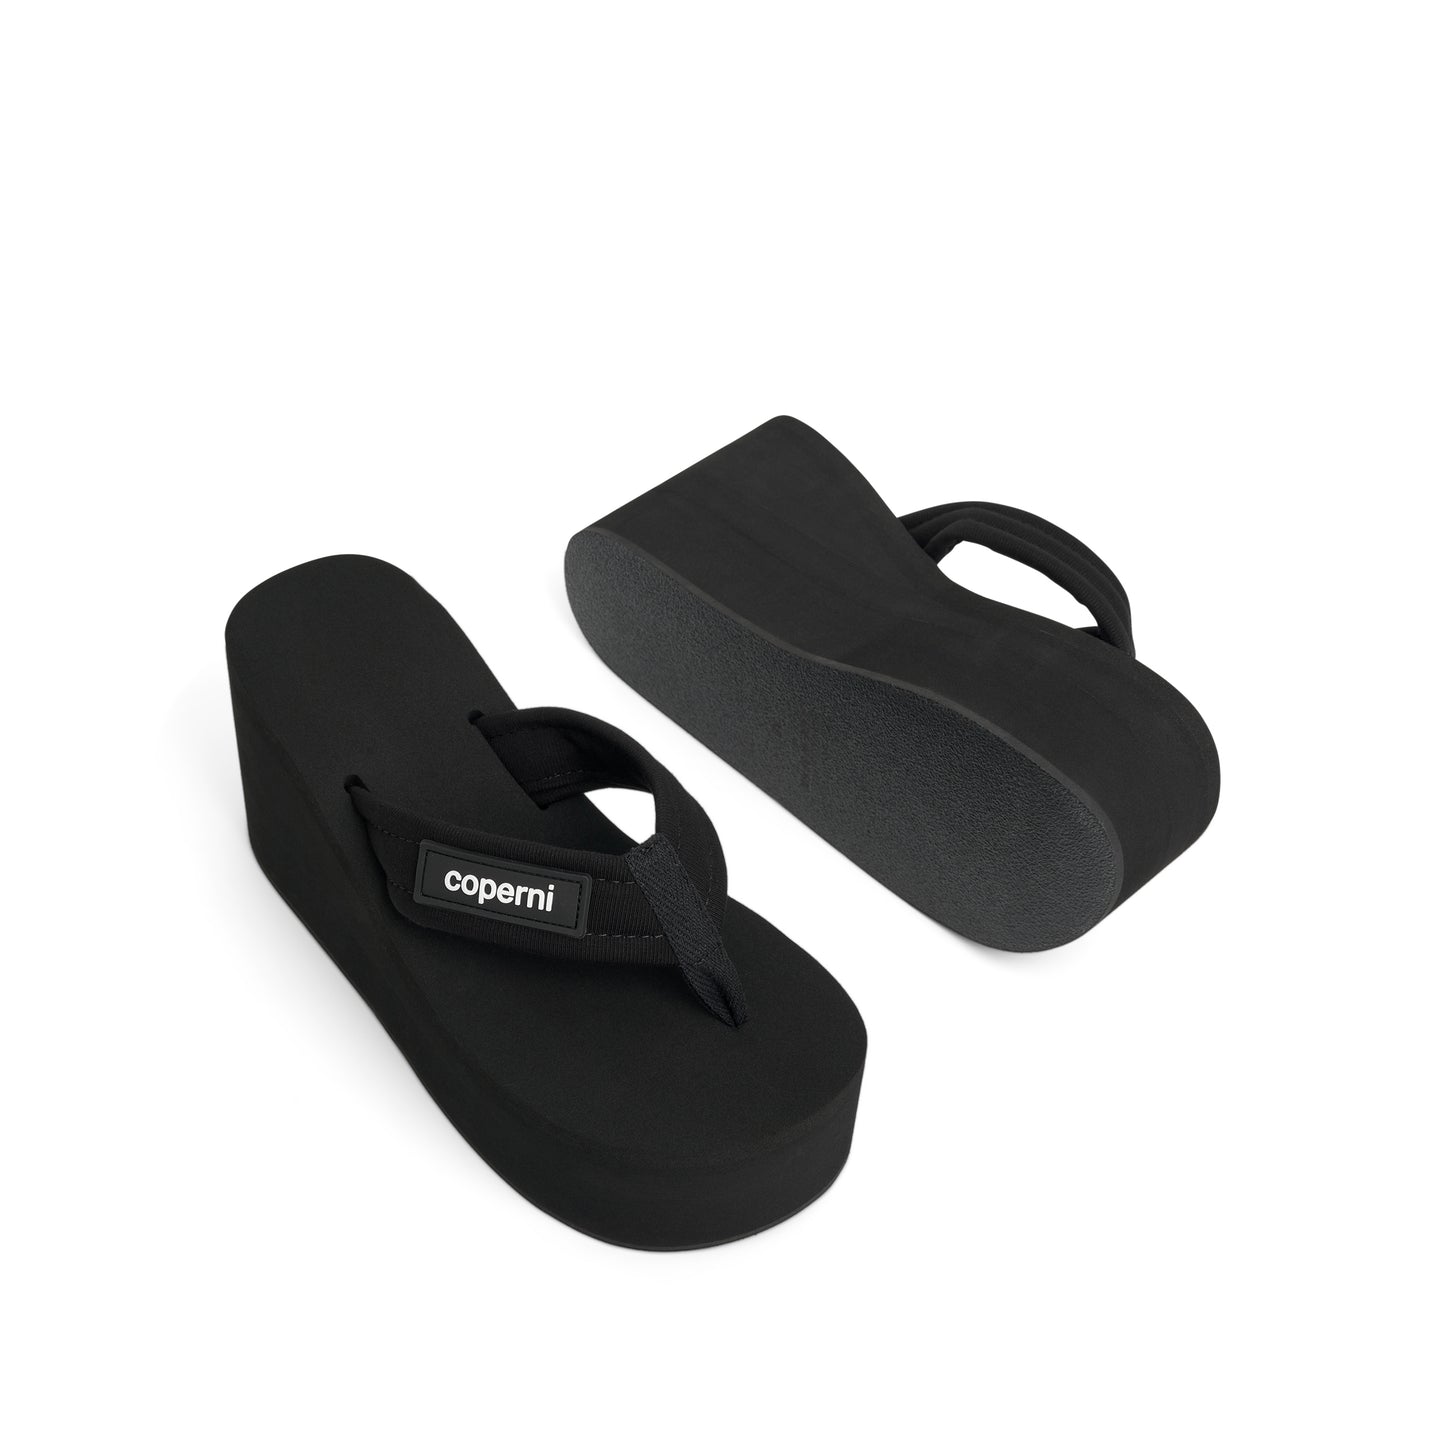 Branded Wedge Sandal in Black